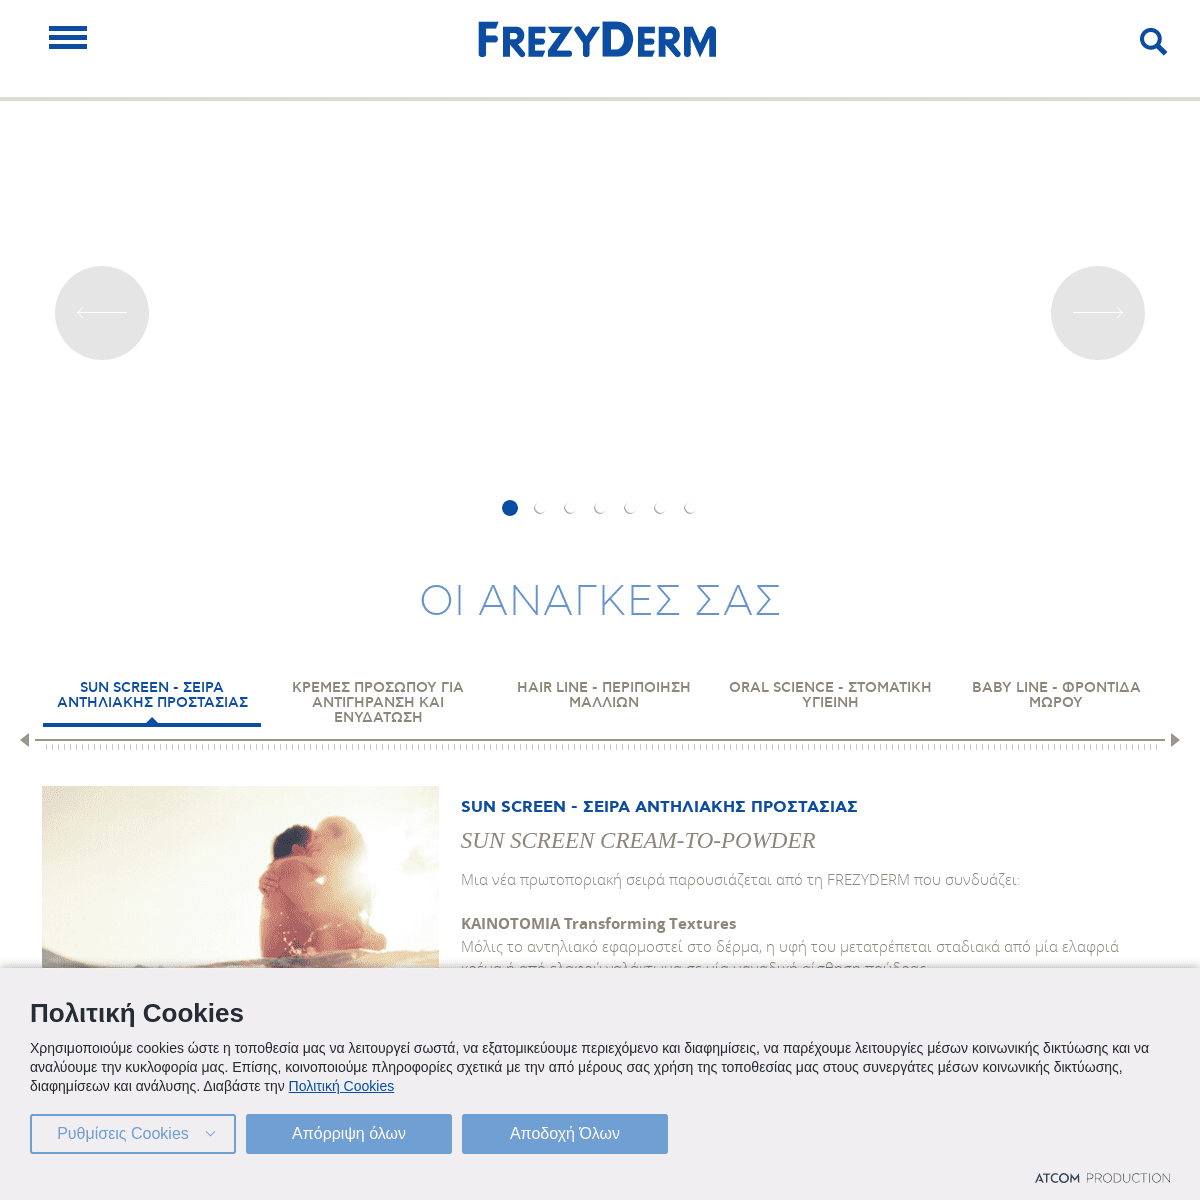 A complete backup of https://frezyderm.gr